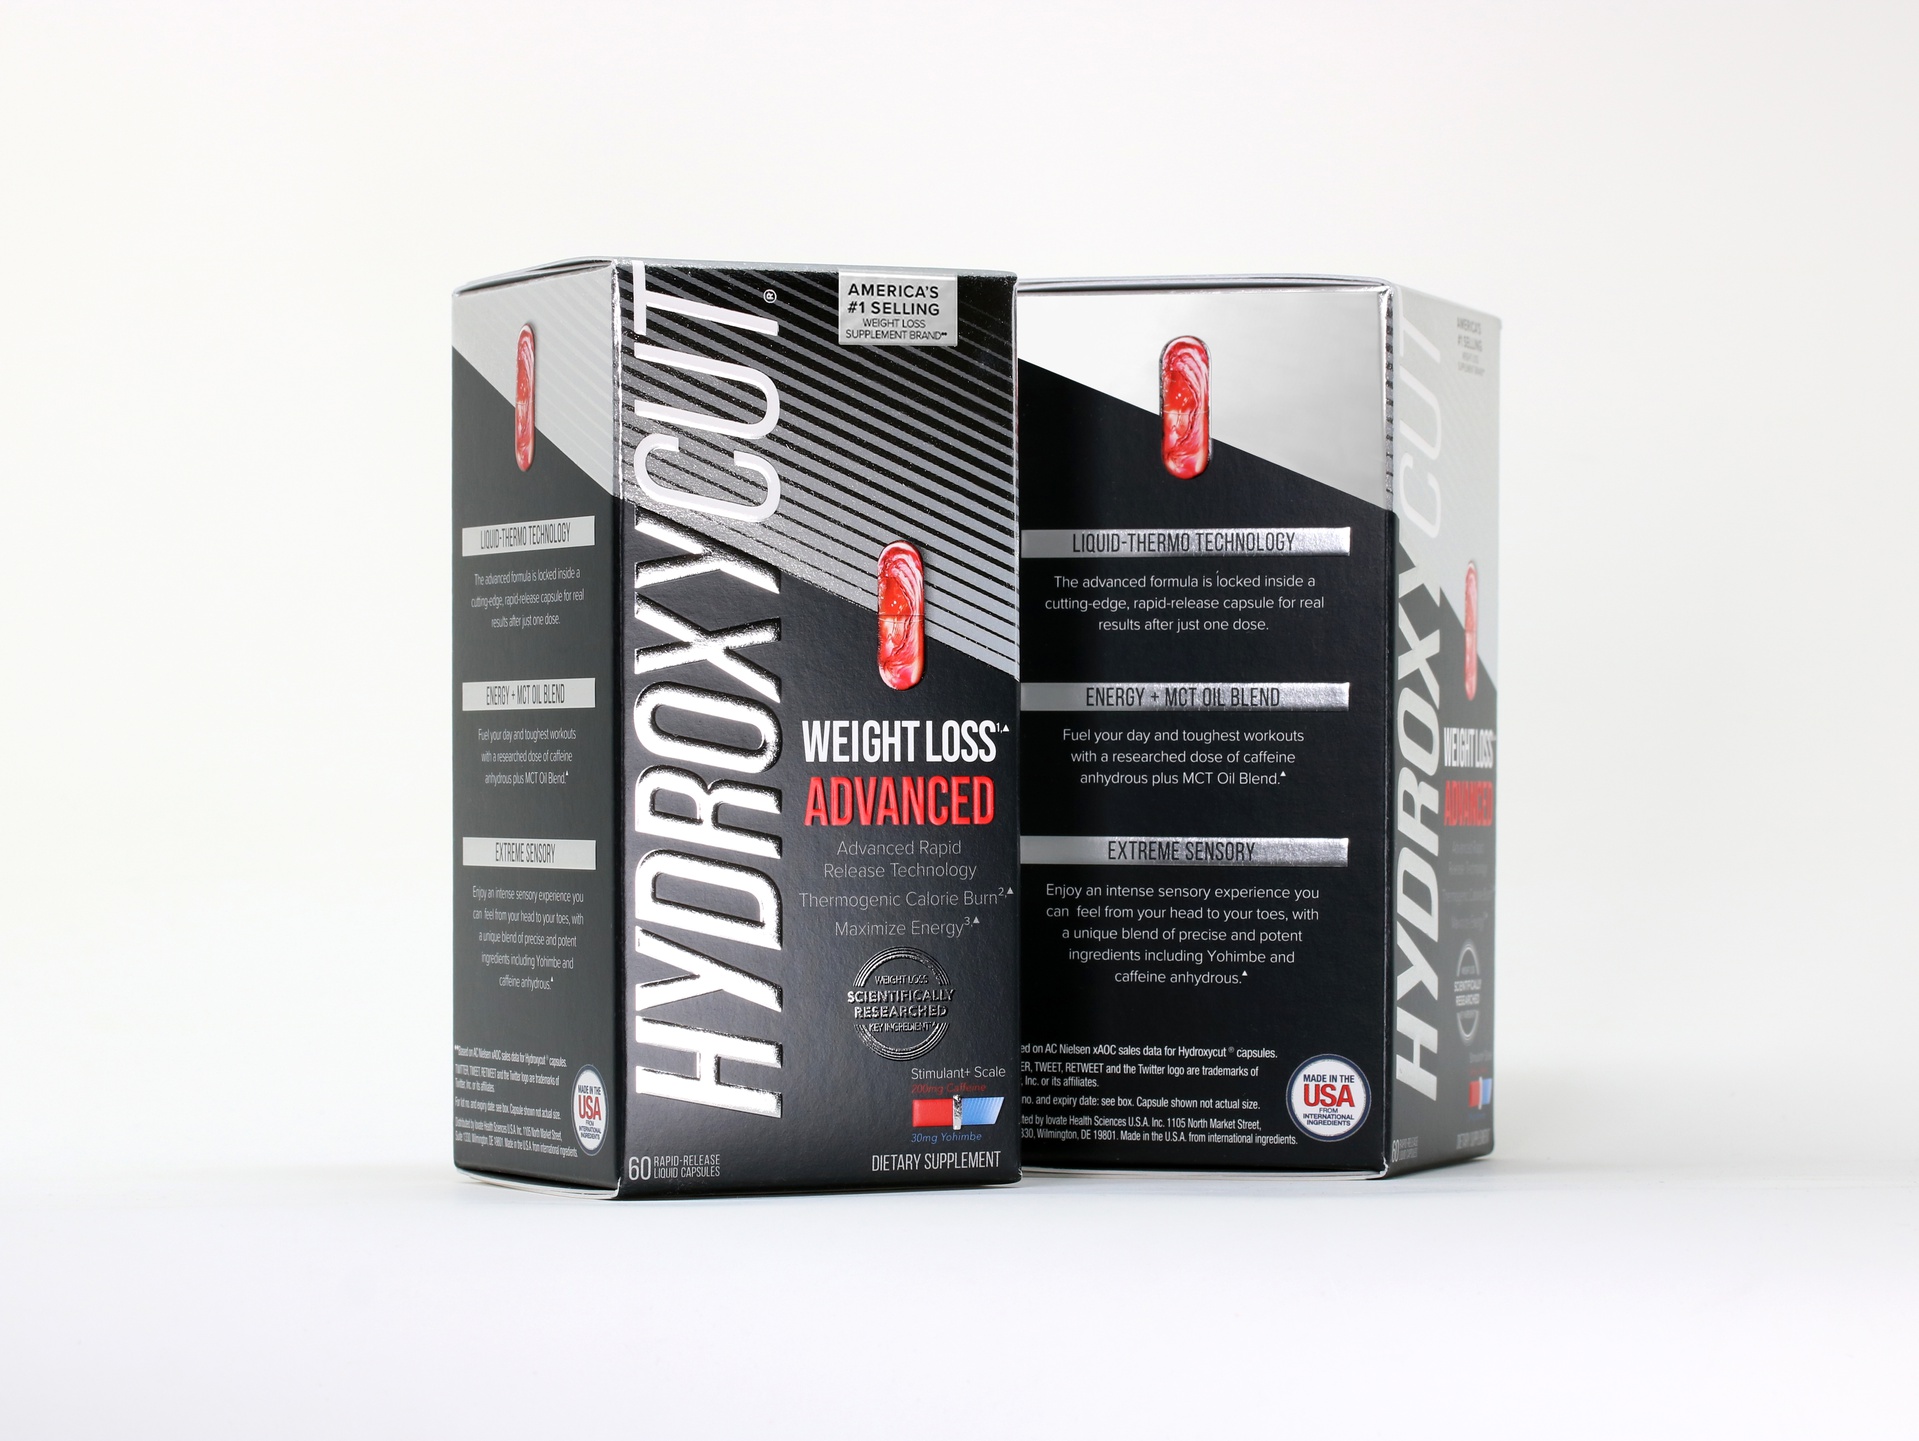 Hydroxycut Advanced folding carton